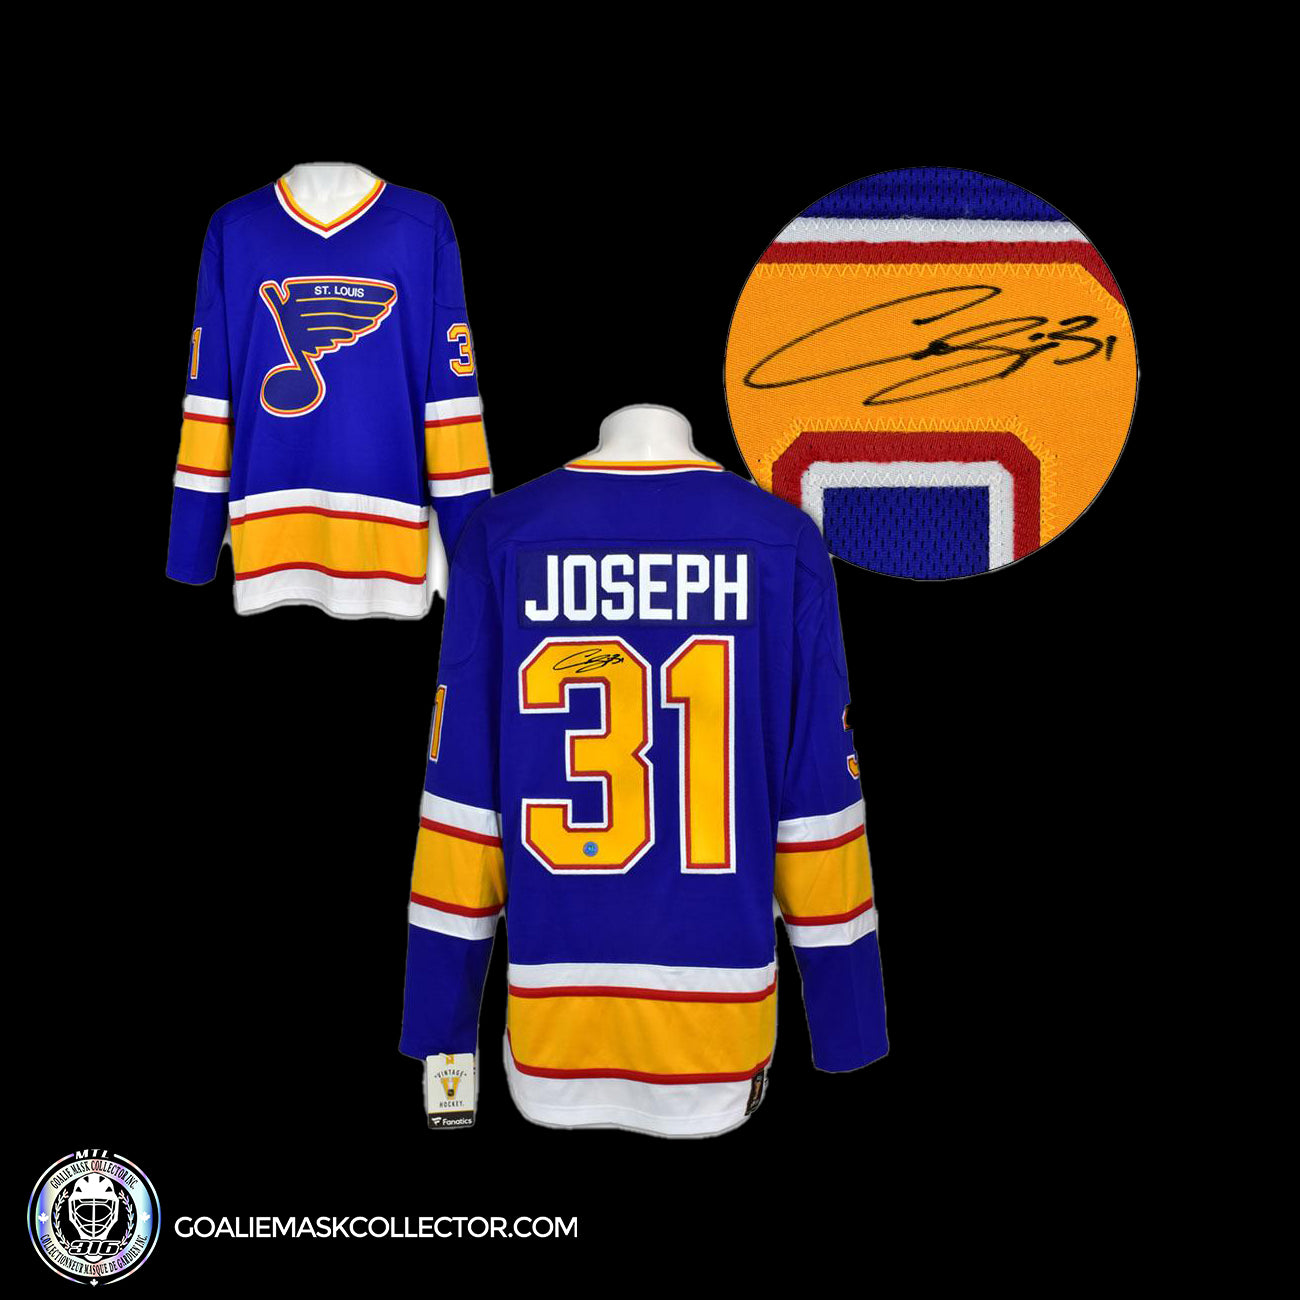 Curtis Joseph 1991 St. Louis Blues Vintage Throwback NHL Hockey Jersey